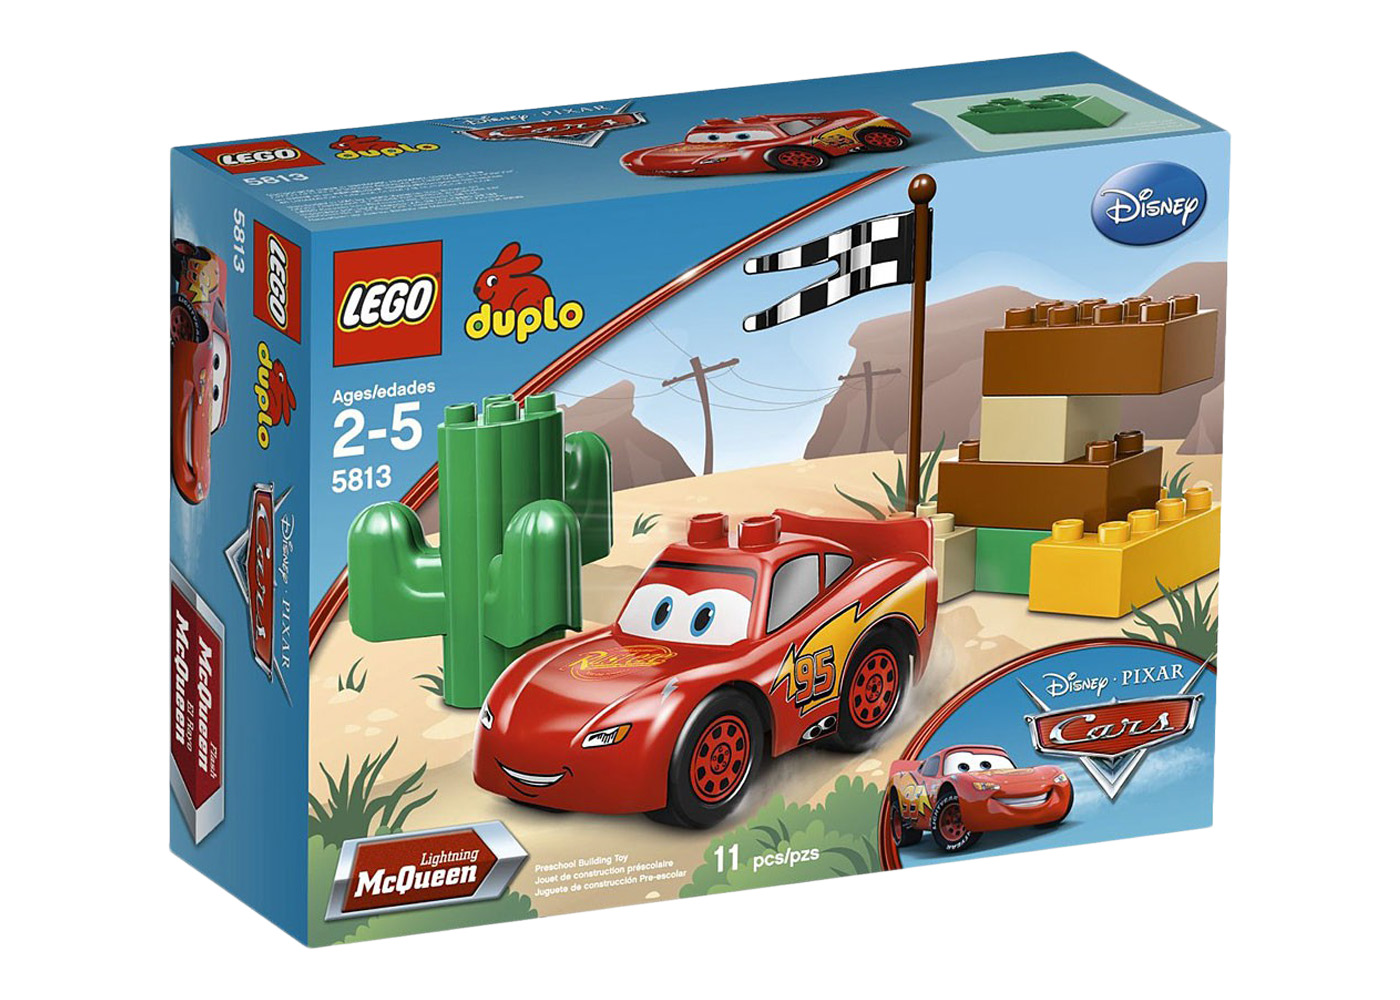 LEGO Disney/Pixar Cars Duplo Lightning McQueen Set 5813 - JP